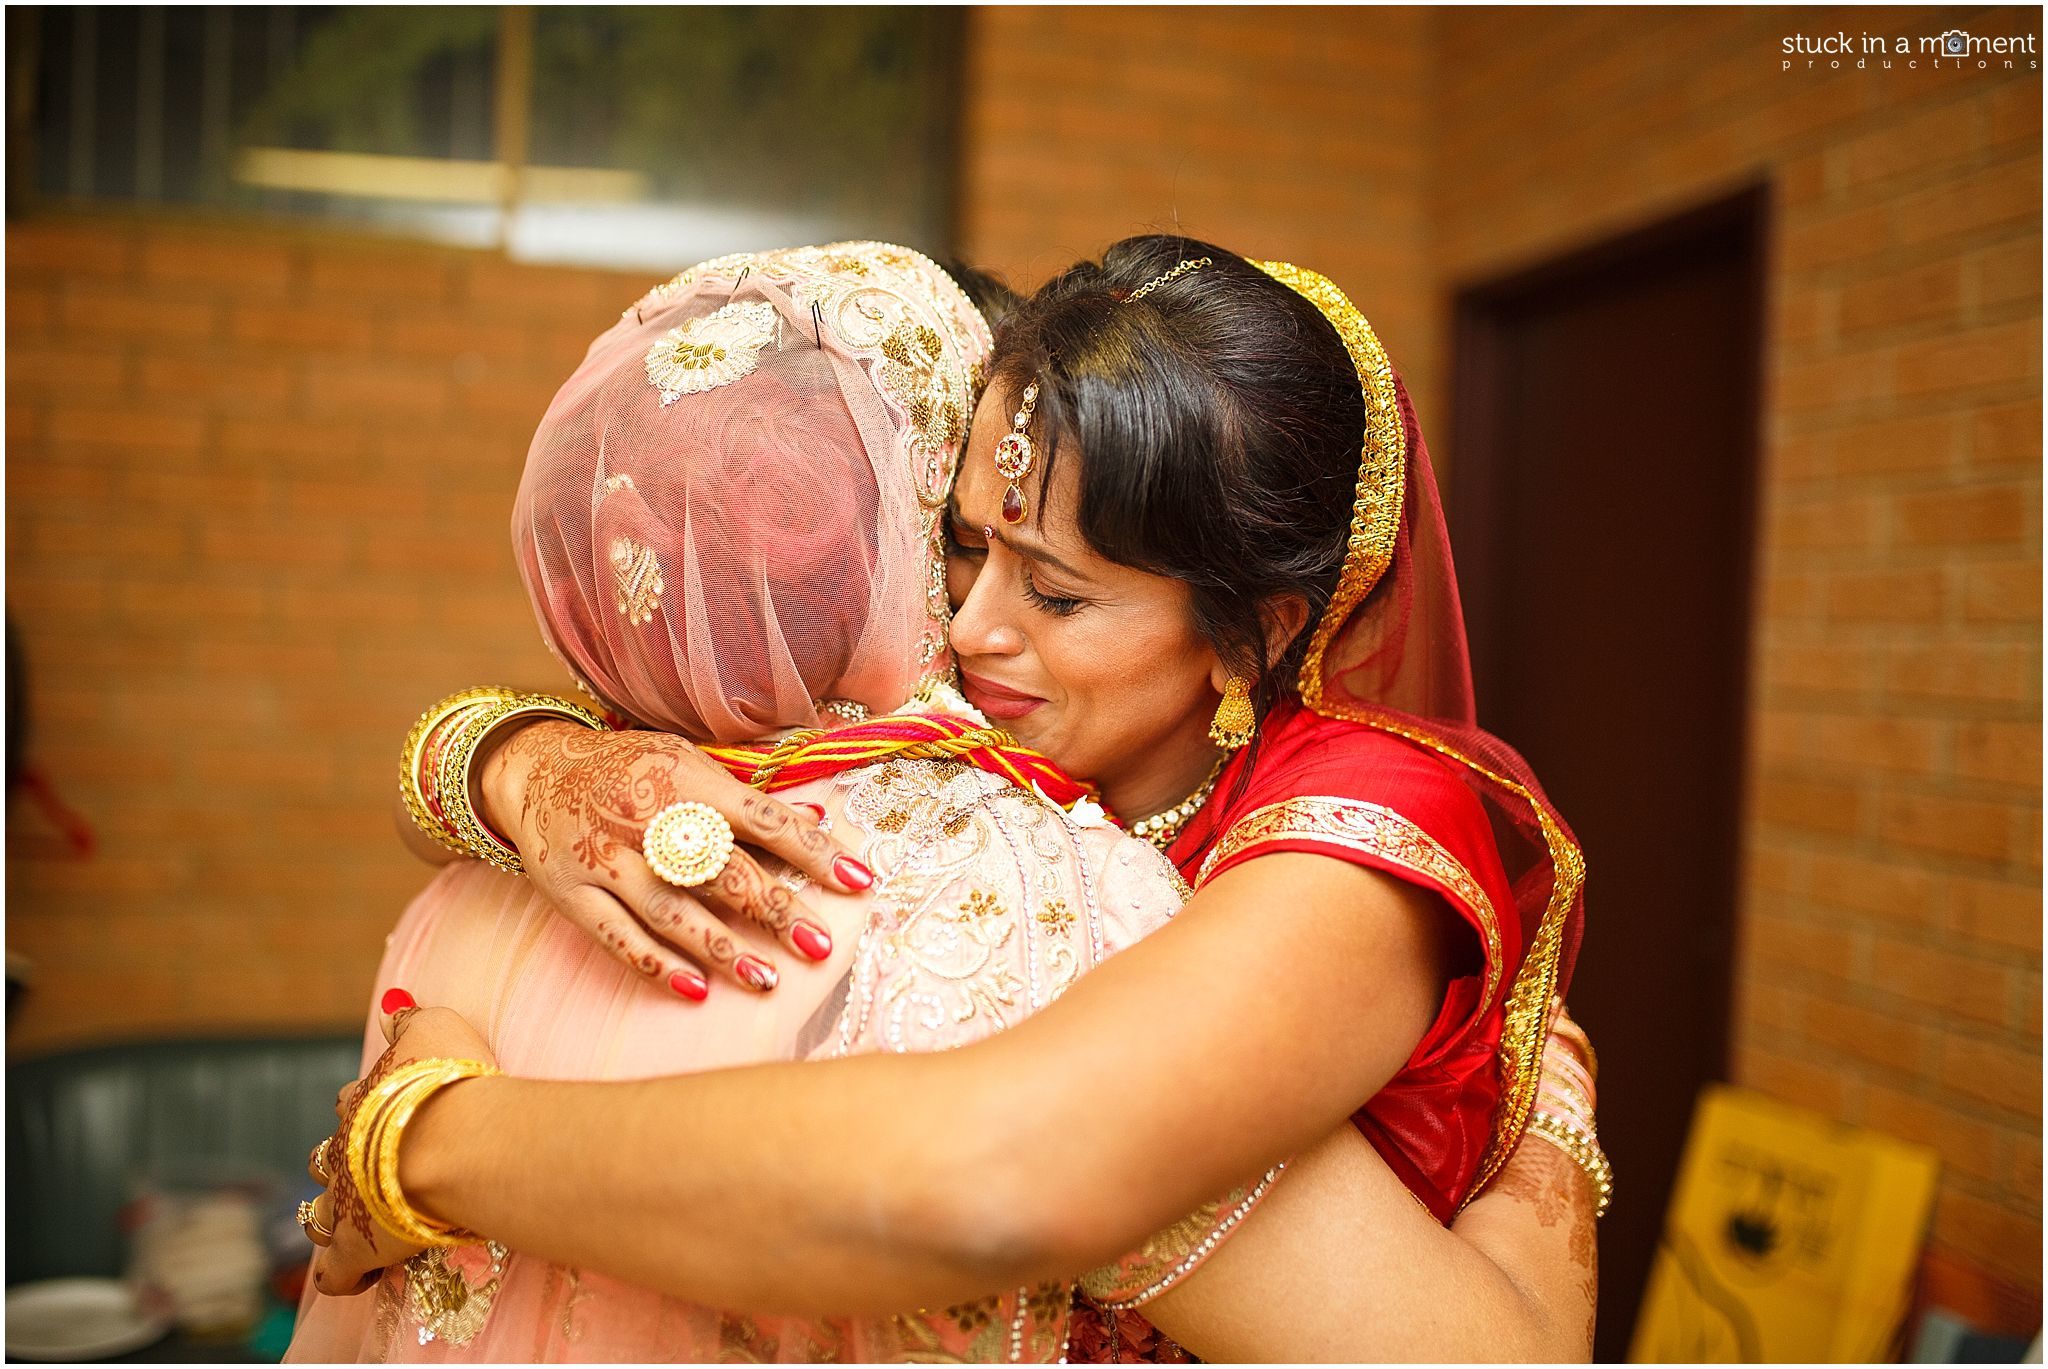 indian wedding videographer sydney grand paradiso